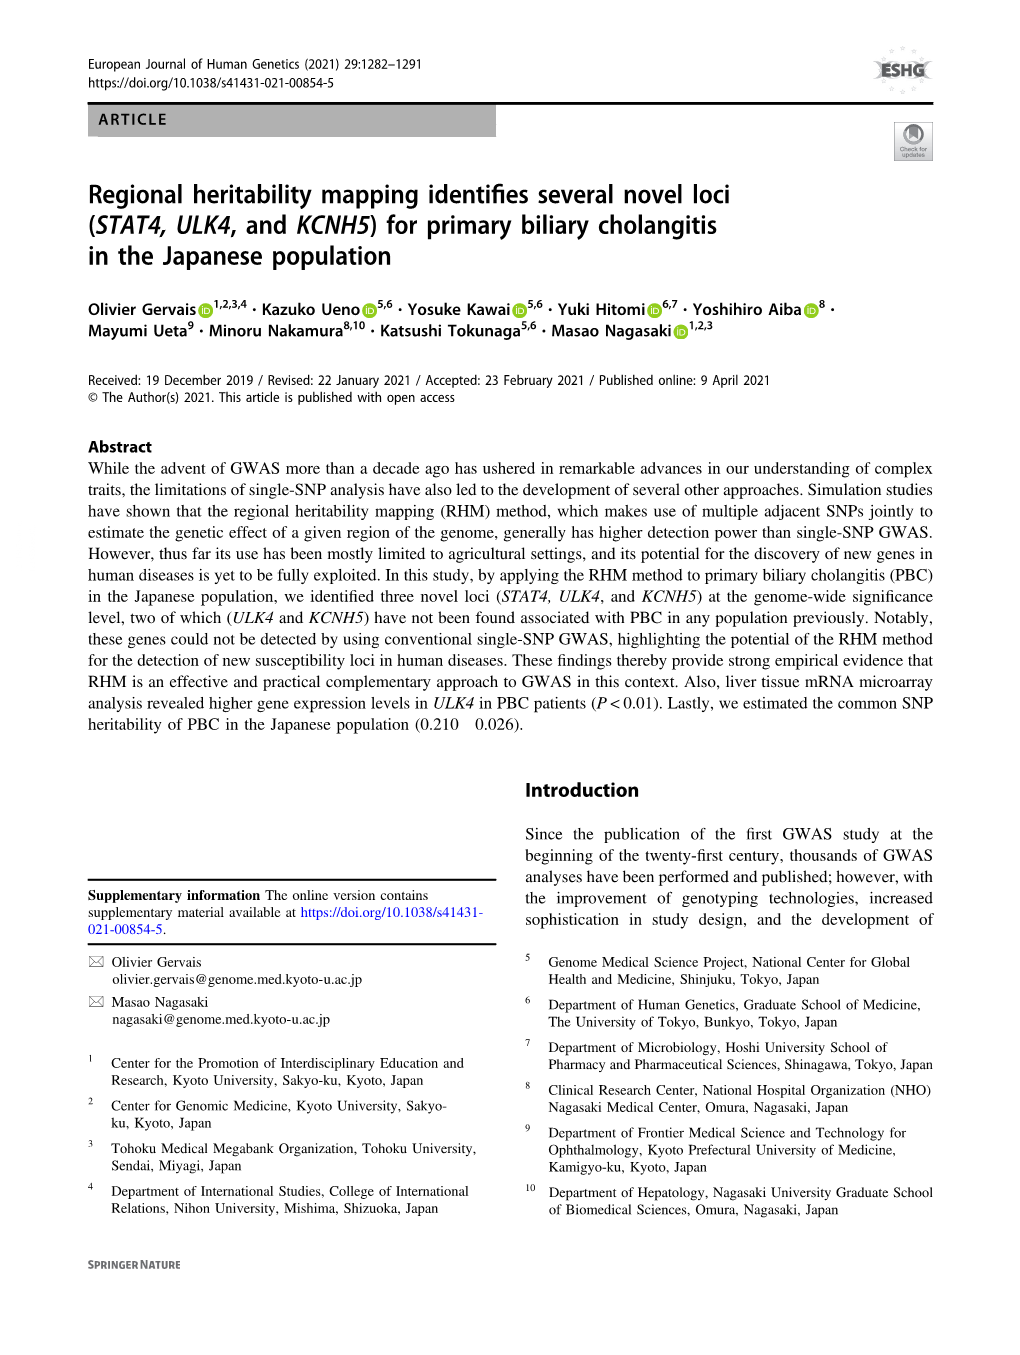 Regional Heritability Mapping Identiies Several Novel Loci (STAT4, ULK4